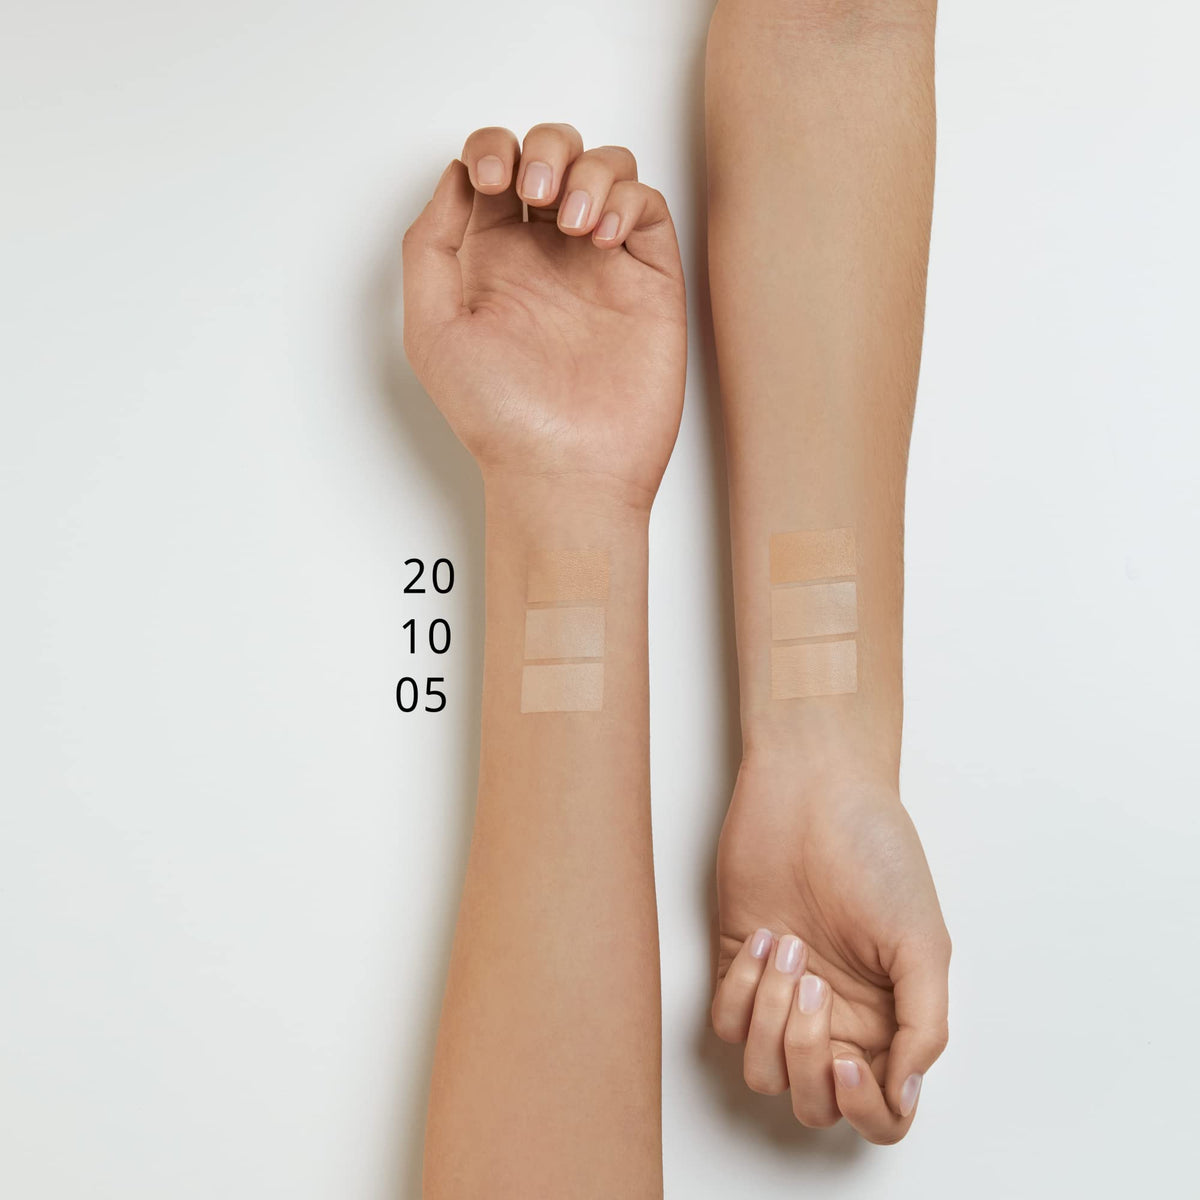 Essence Skin Lovin' Sensitive Concealer 3.5 ml - 20 Medium